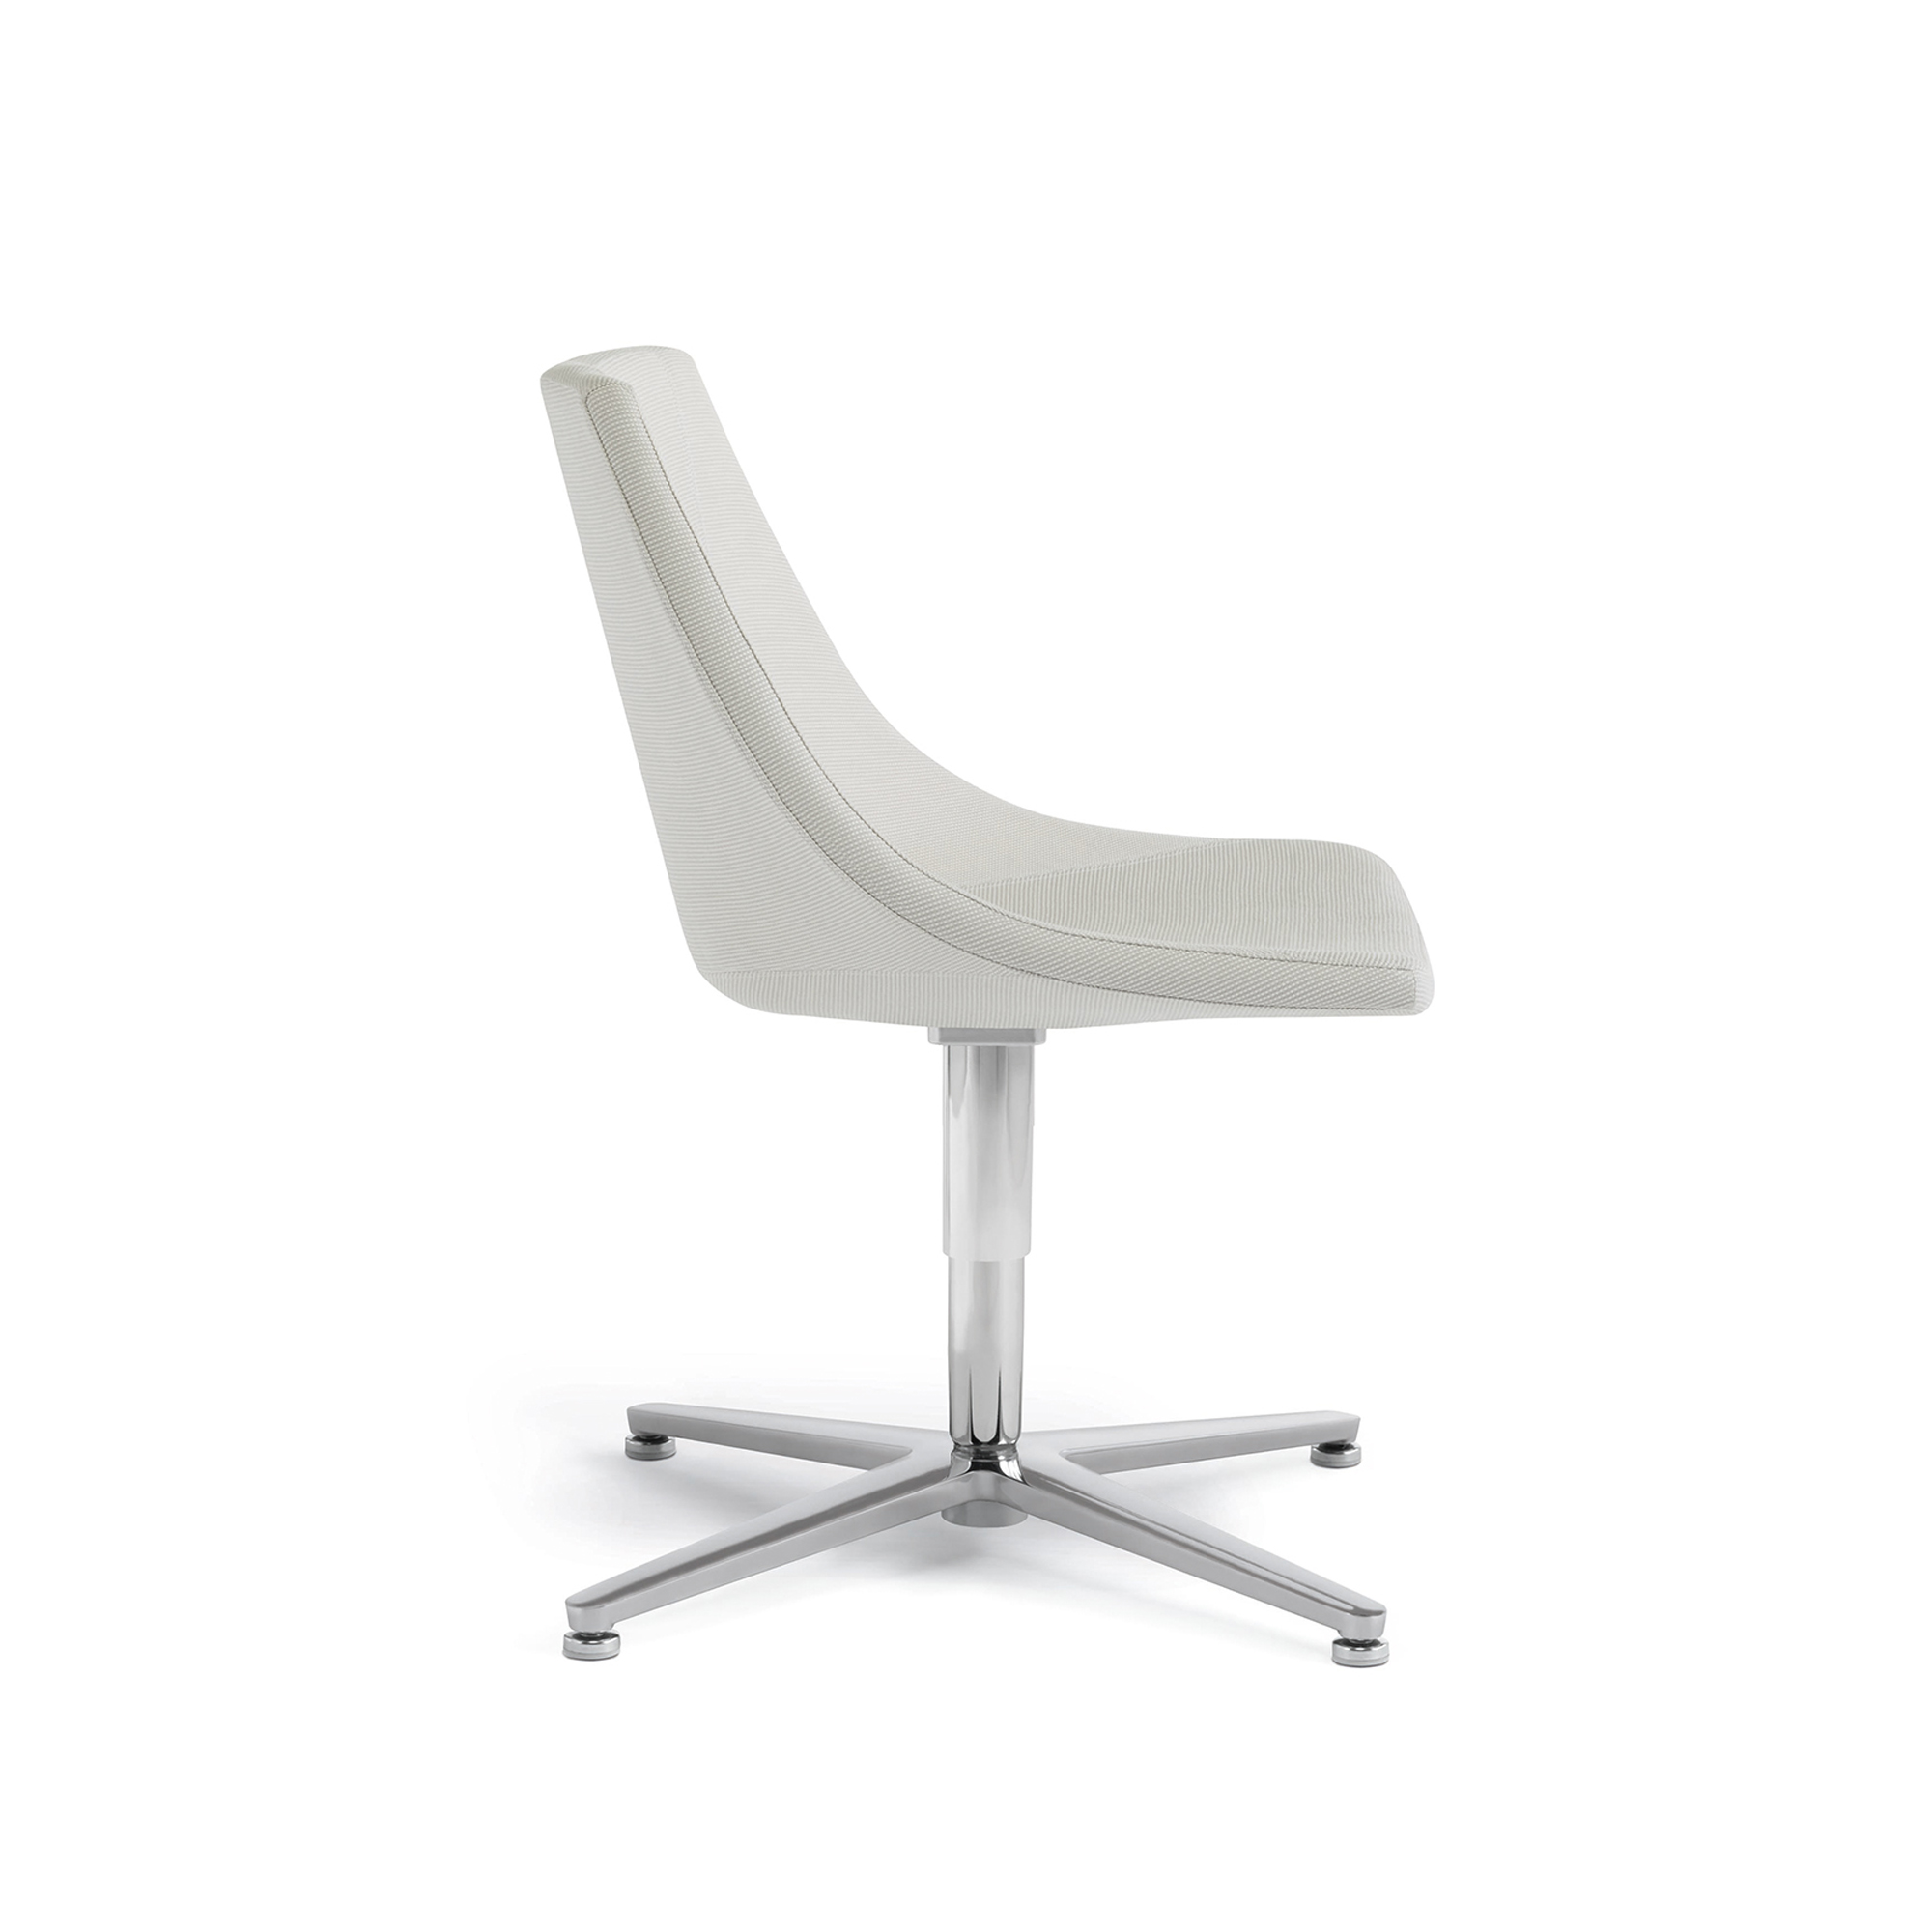 Chirp Lounge Chair, Swivel Base, Side Profile